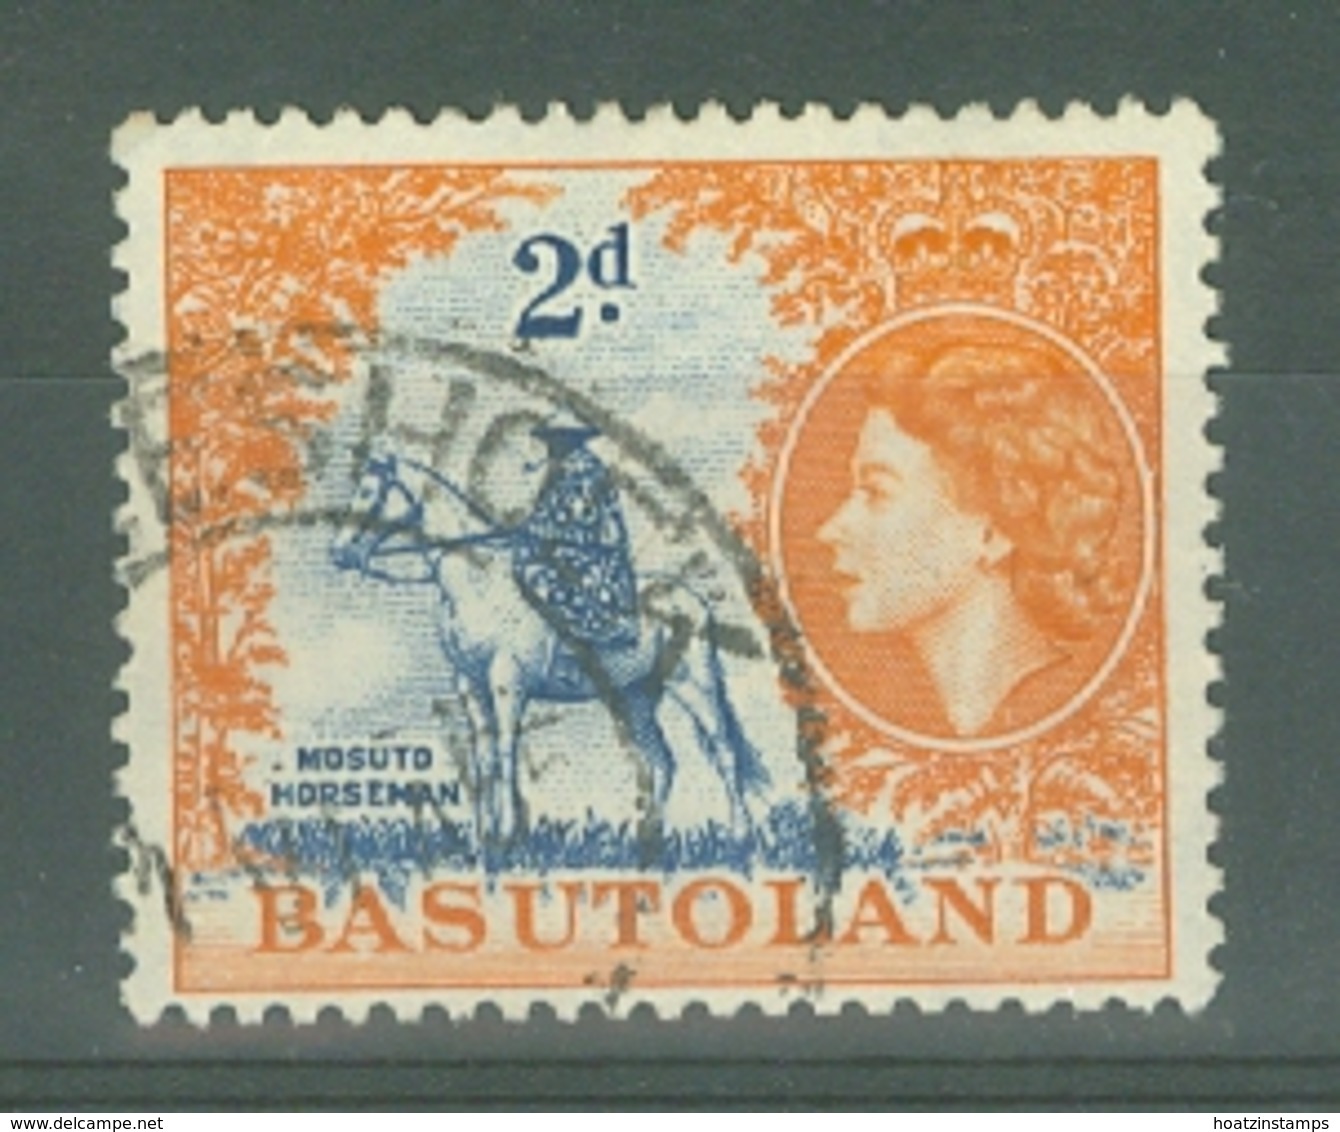 Basutoland: 1954/58   QE II - Pictorial   SG45   2d    Used - 1933-1964 Kronenkolonie